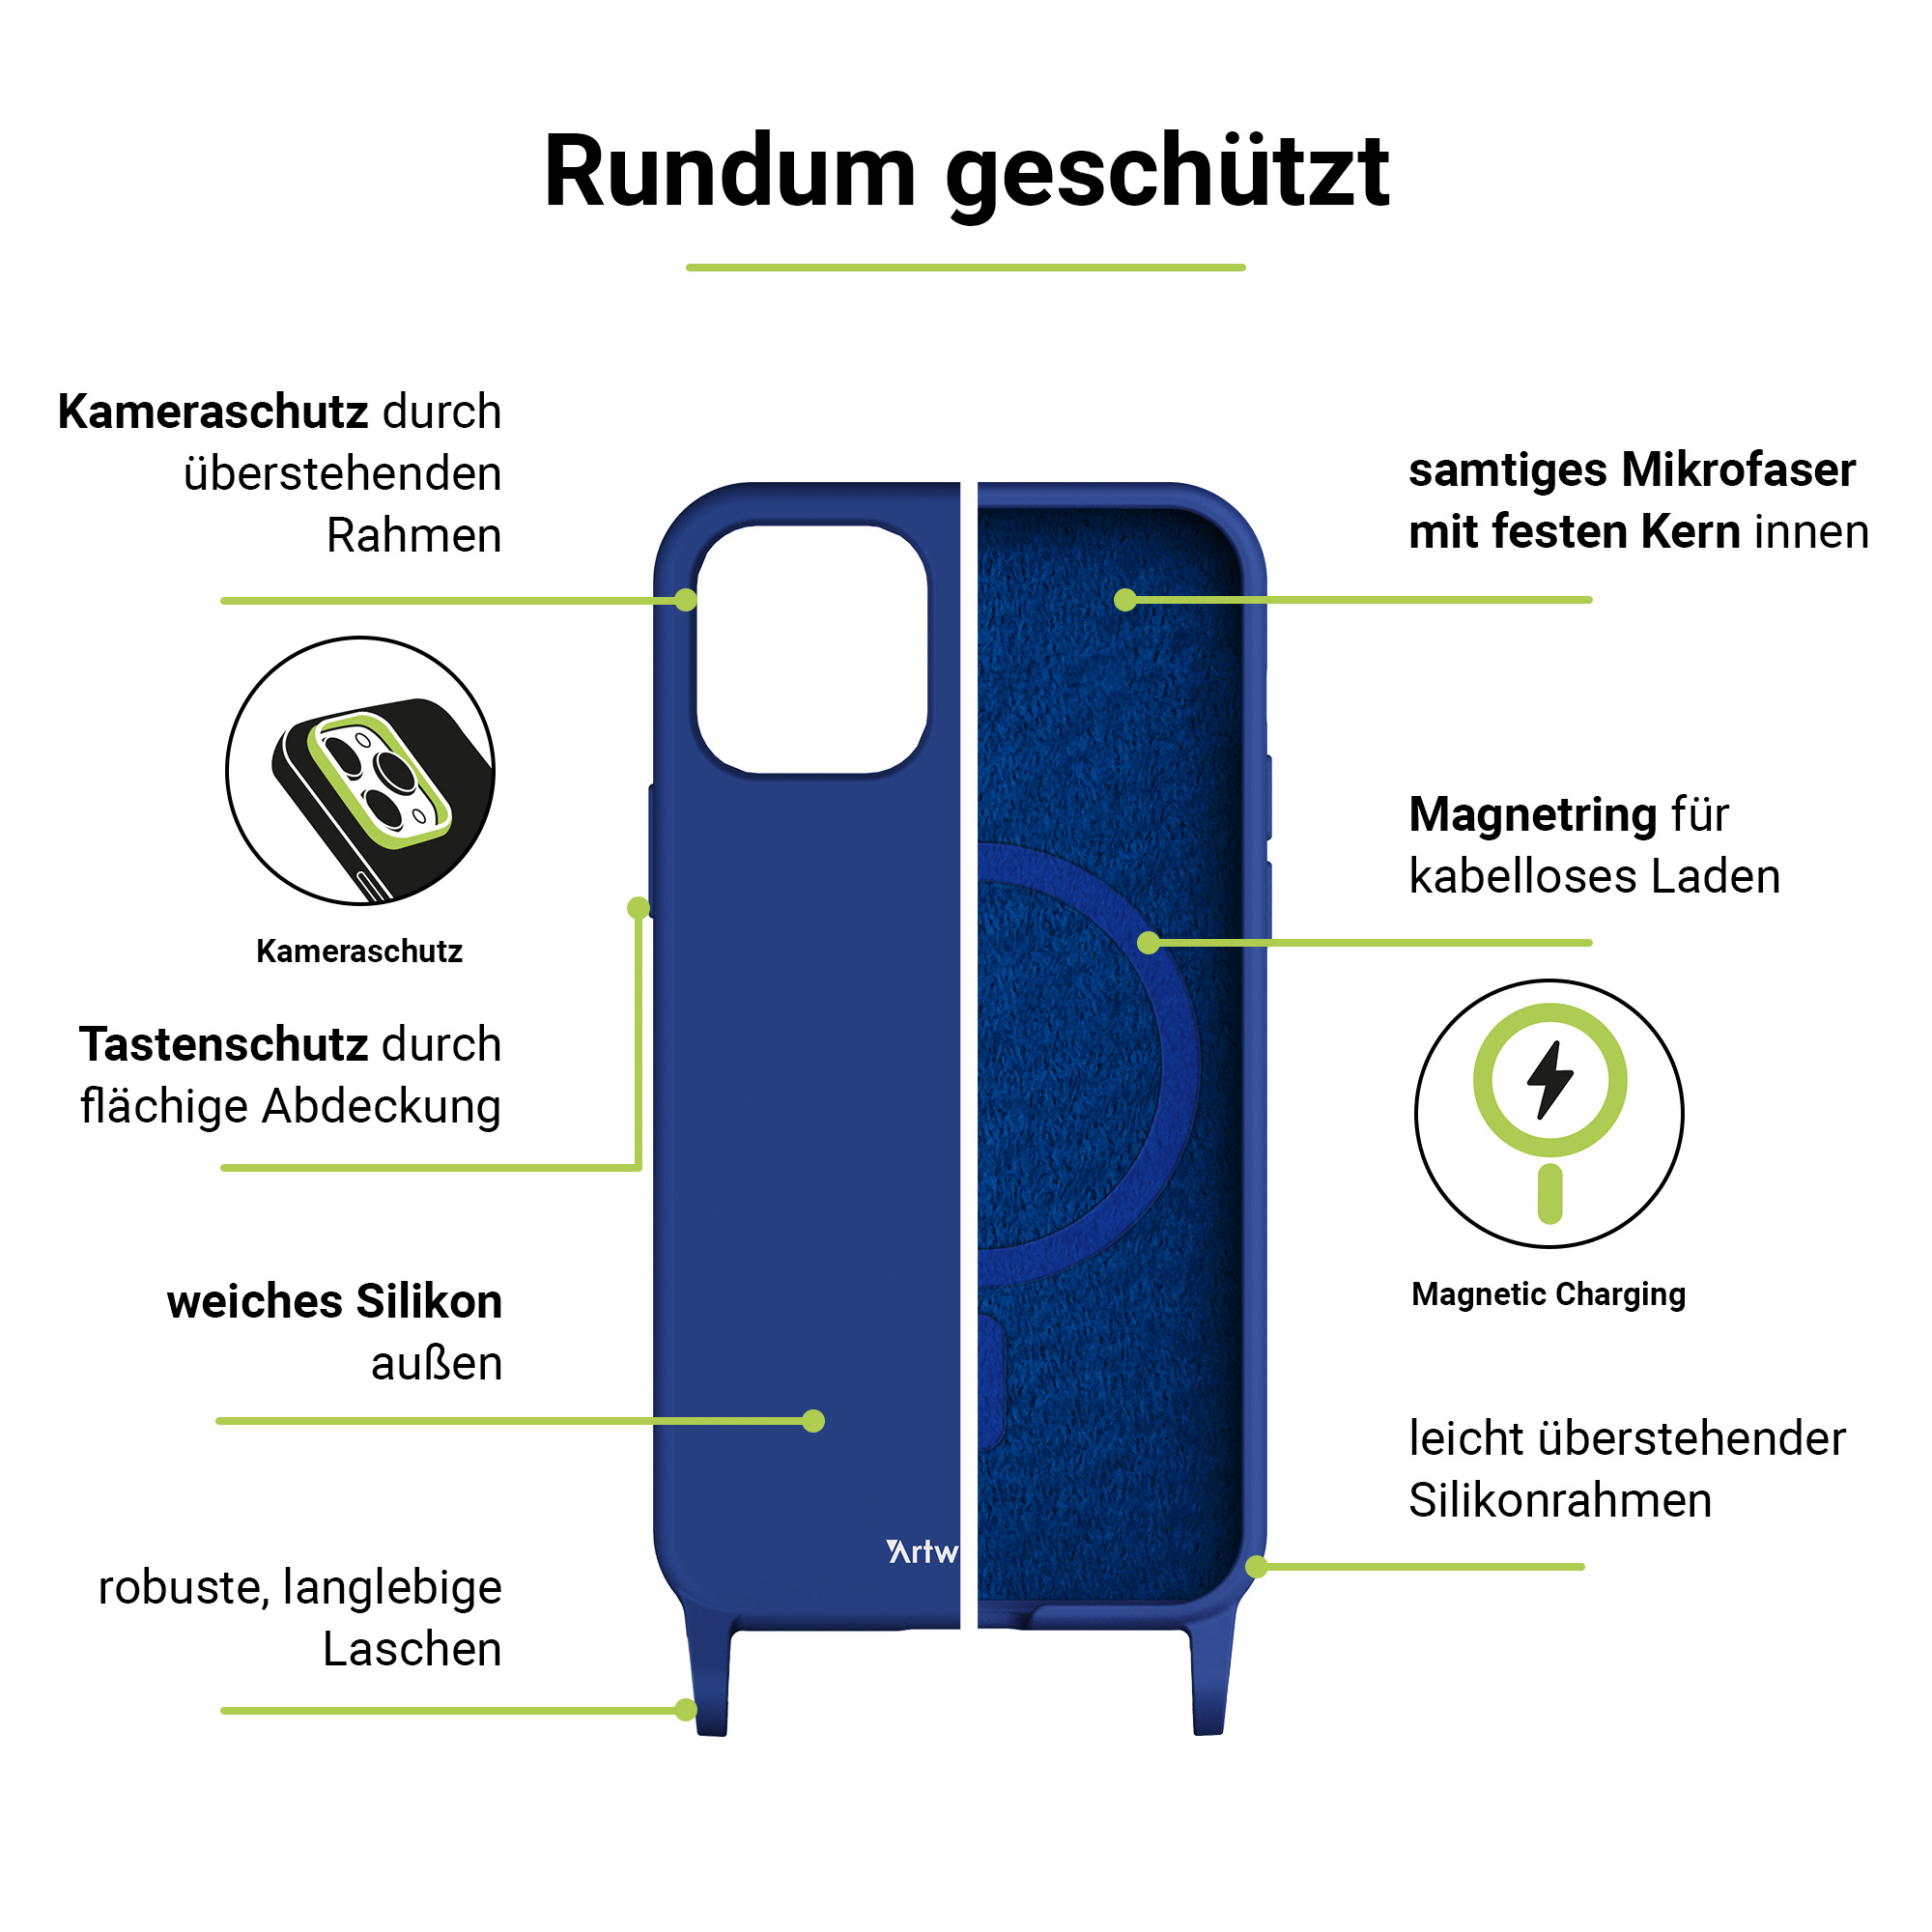 ARTWIZZ Case Umhängetasche, +CHARGE, Silicone Apple, 15, HangOn Blau iPhone